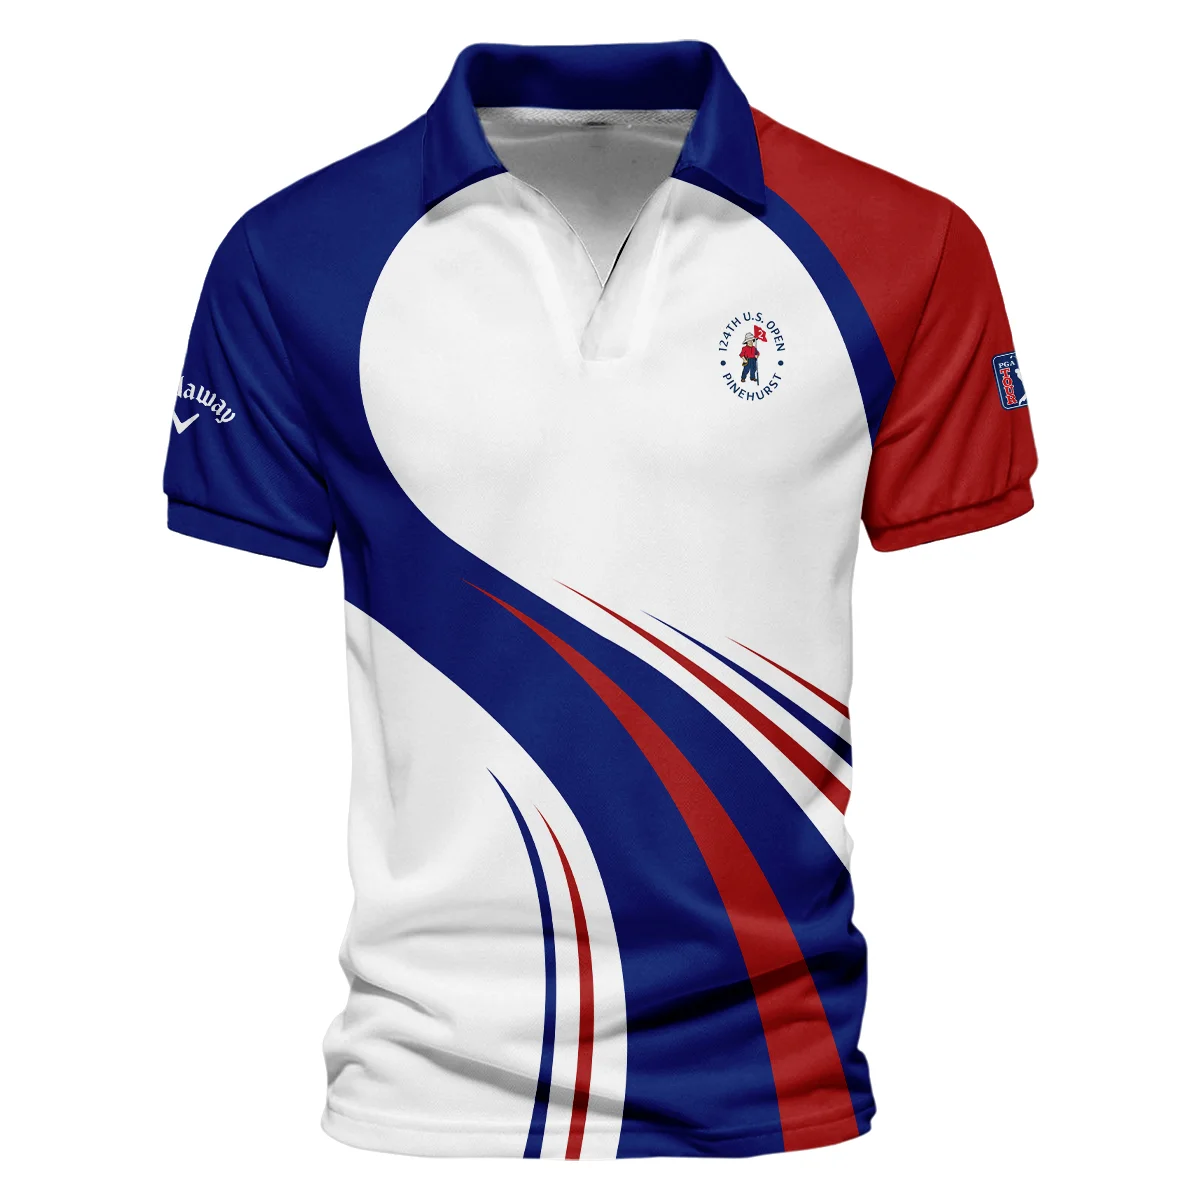 Callaway 124th U.S. Open Pinehurst Golf Blue Red White Background Vneck Polo Shirt Style Classic Polo Shirt For Men